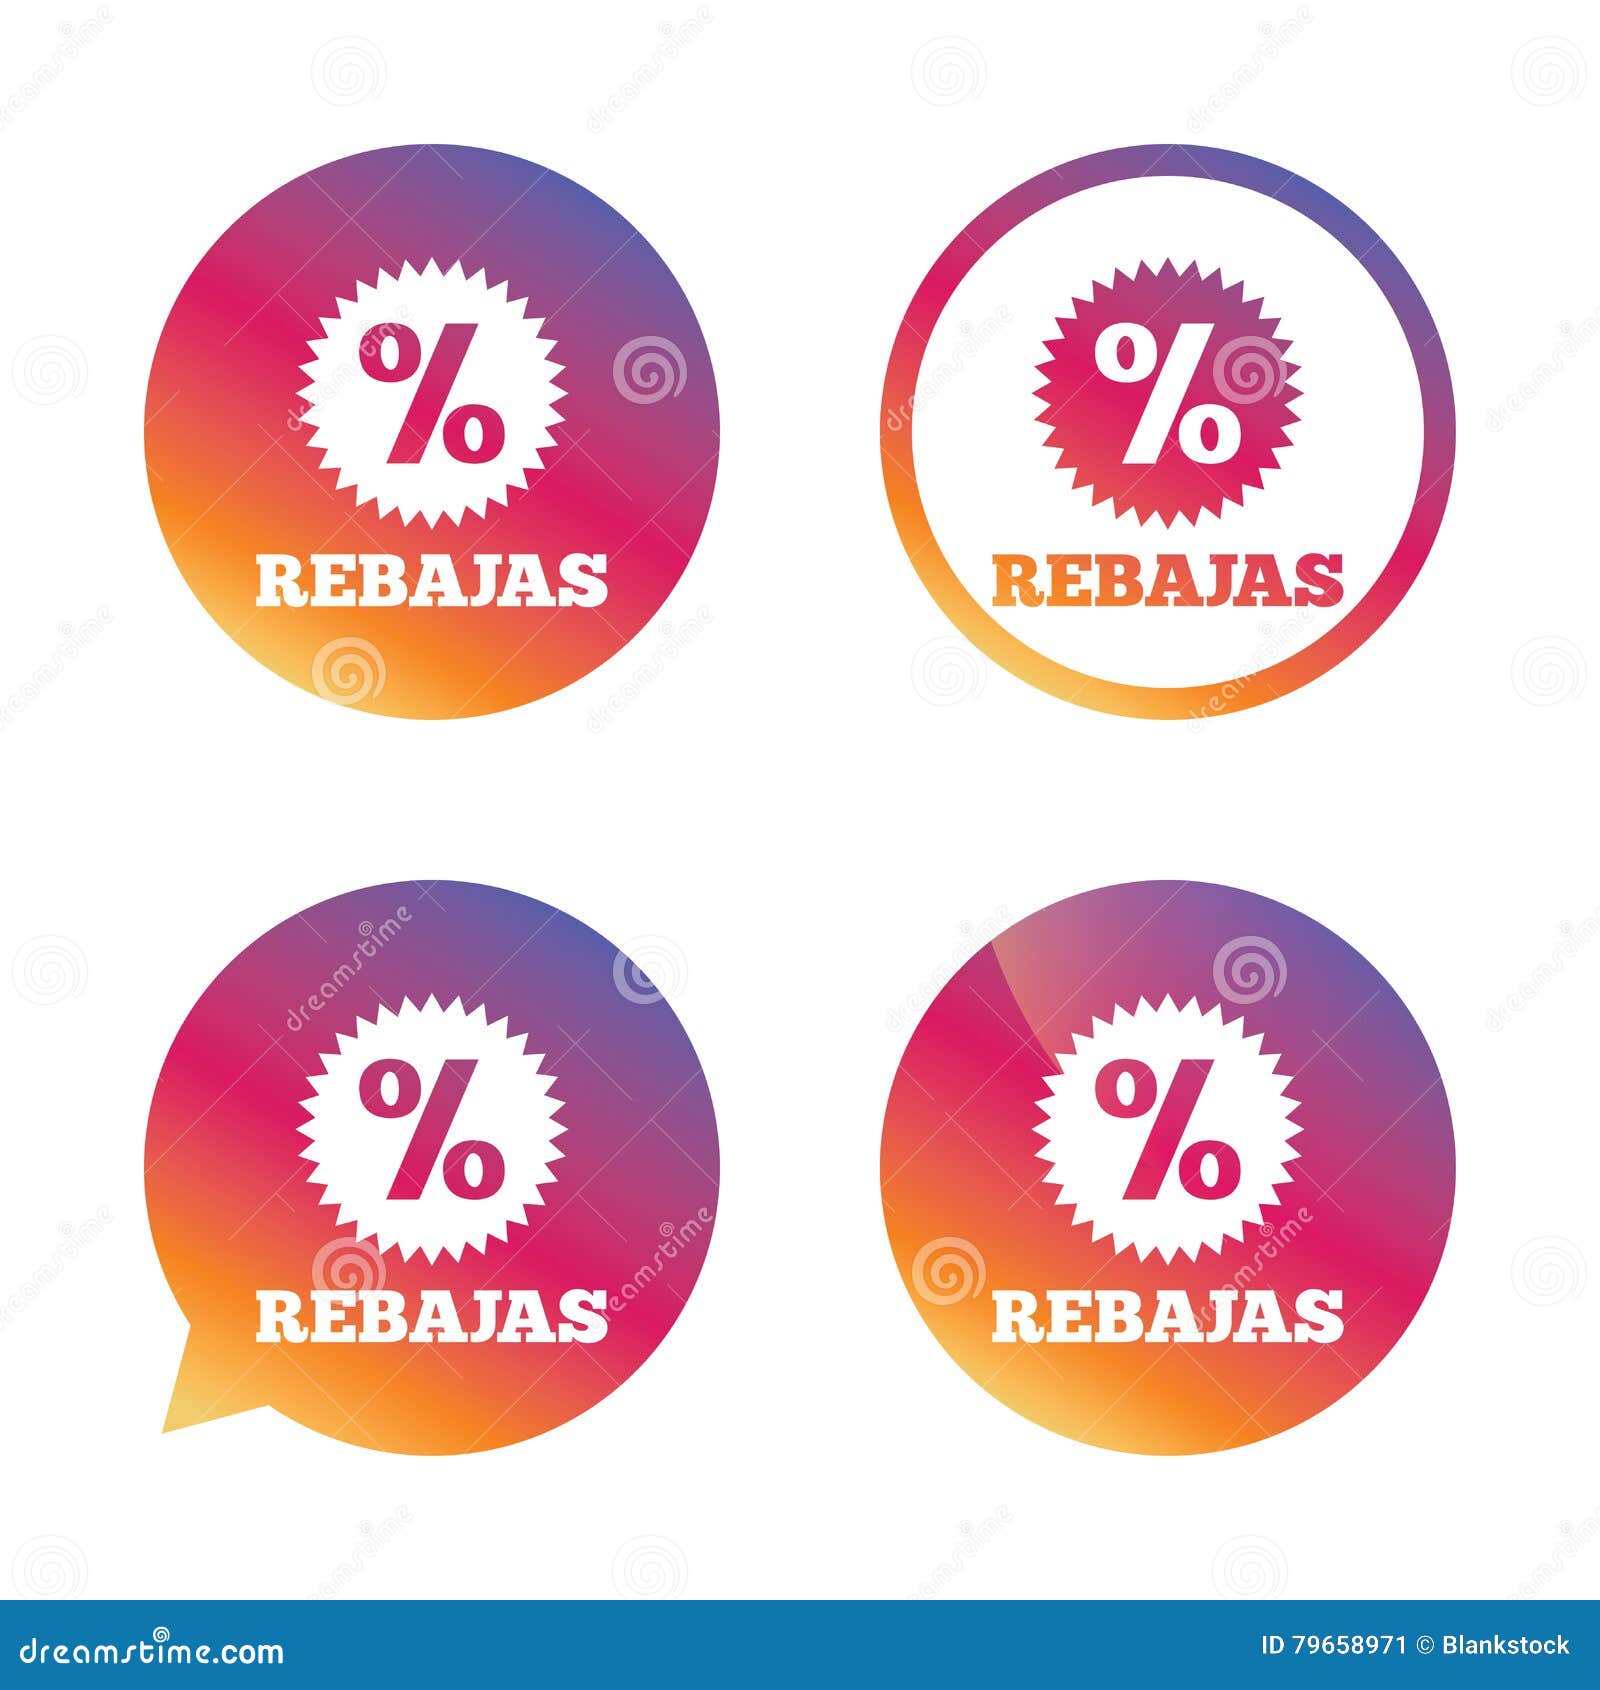 rebajas - discounts in spain sign icon. star.